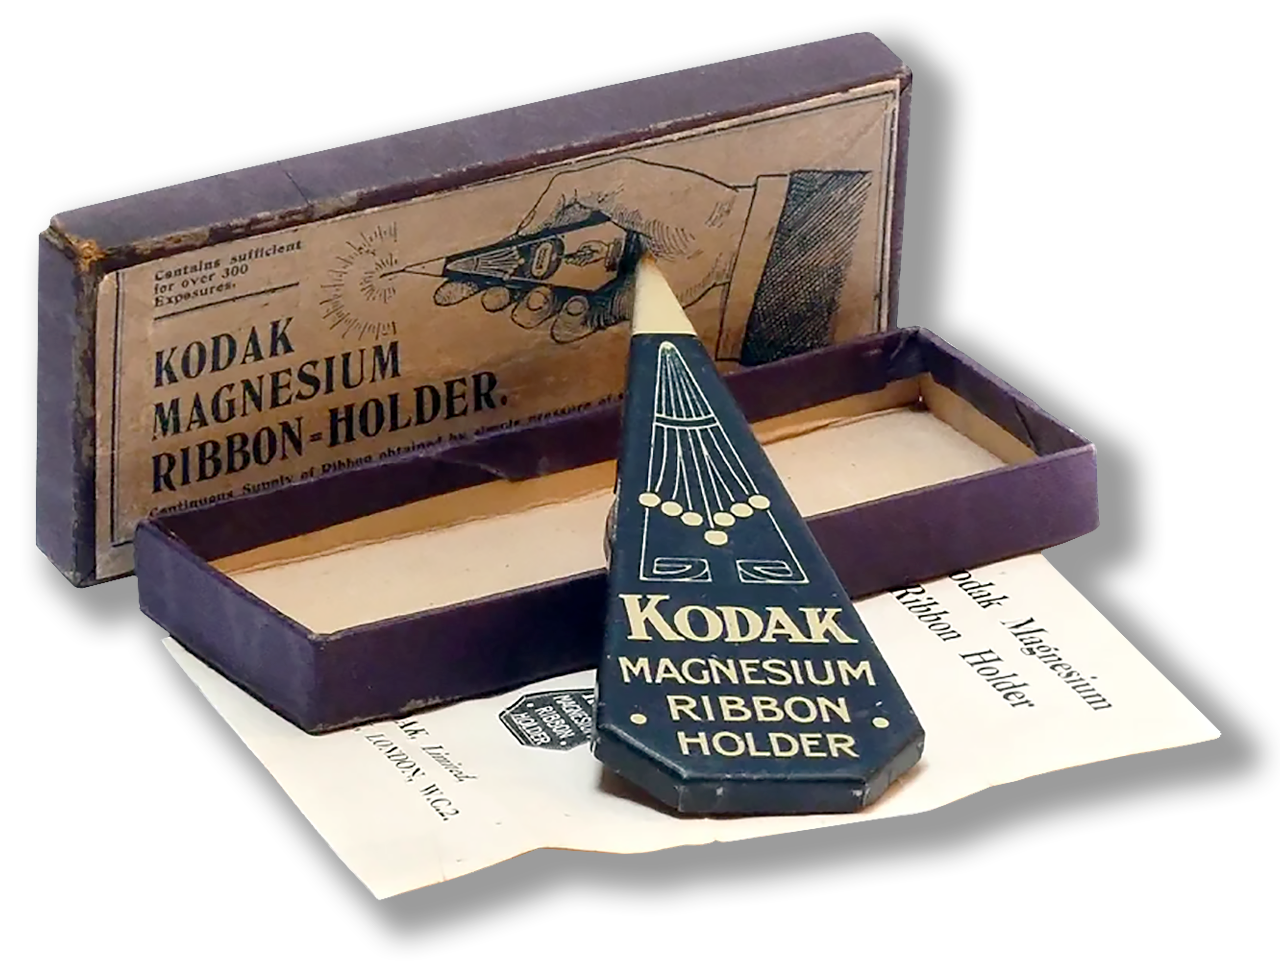 1280x967px-Kodak-Ribbon-holder-vWA24